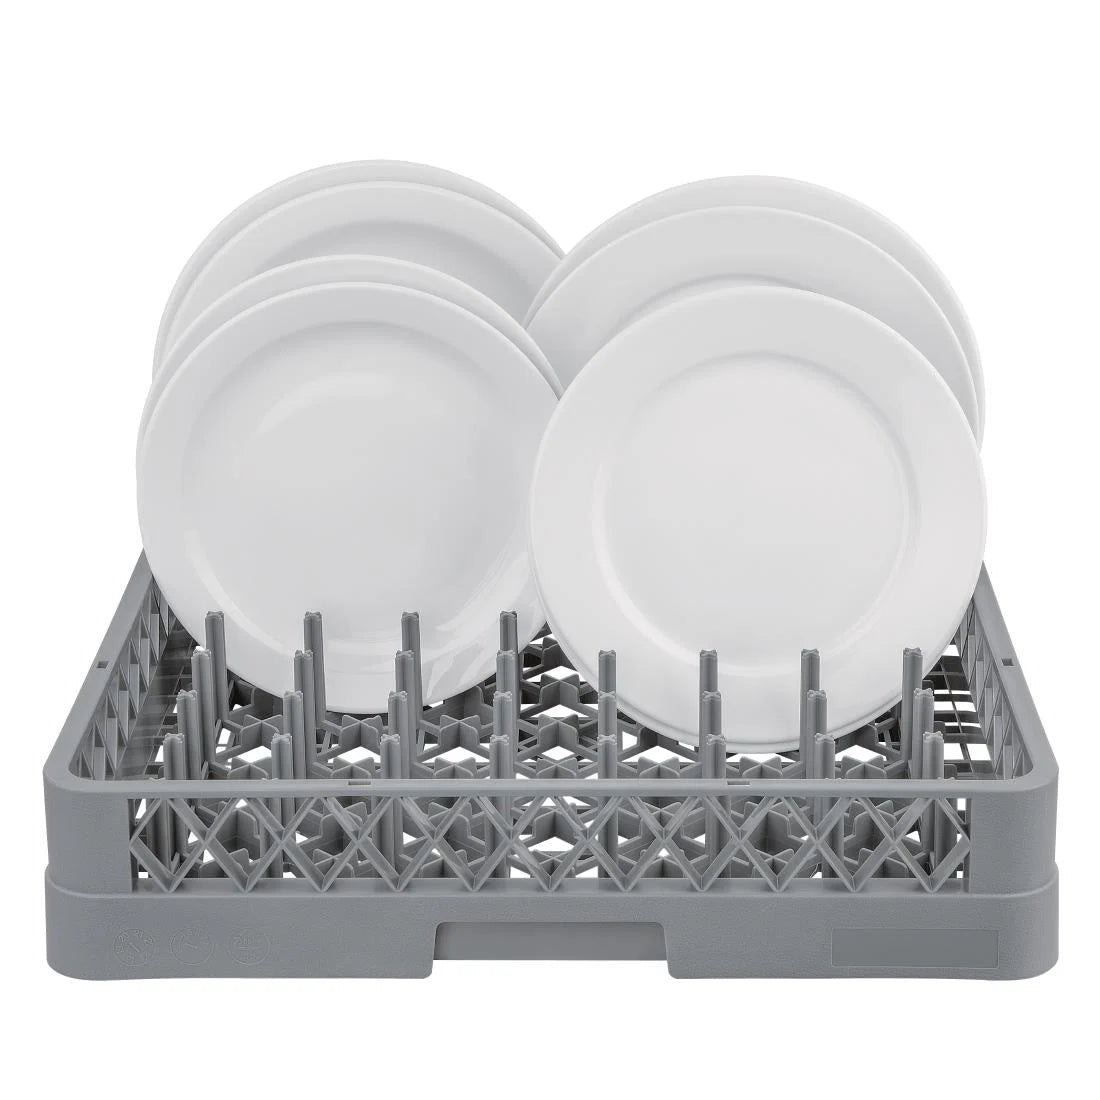 K909 Vogue Plate Dishwasher Rack JD Catering Equipment Solutions Ltd